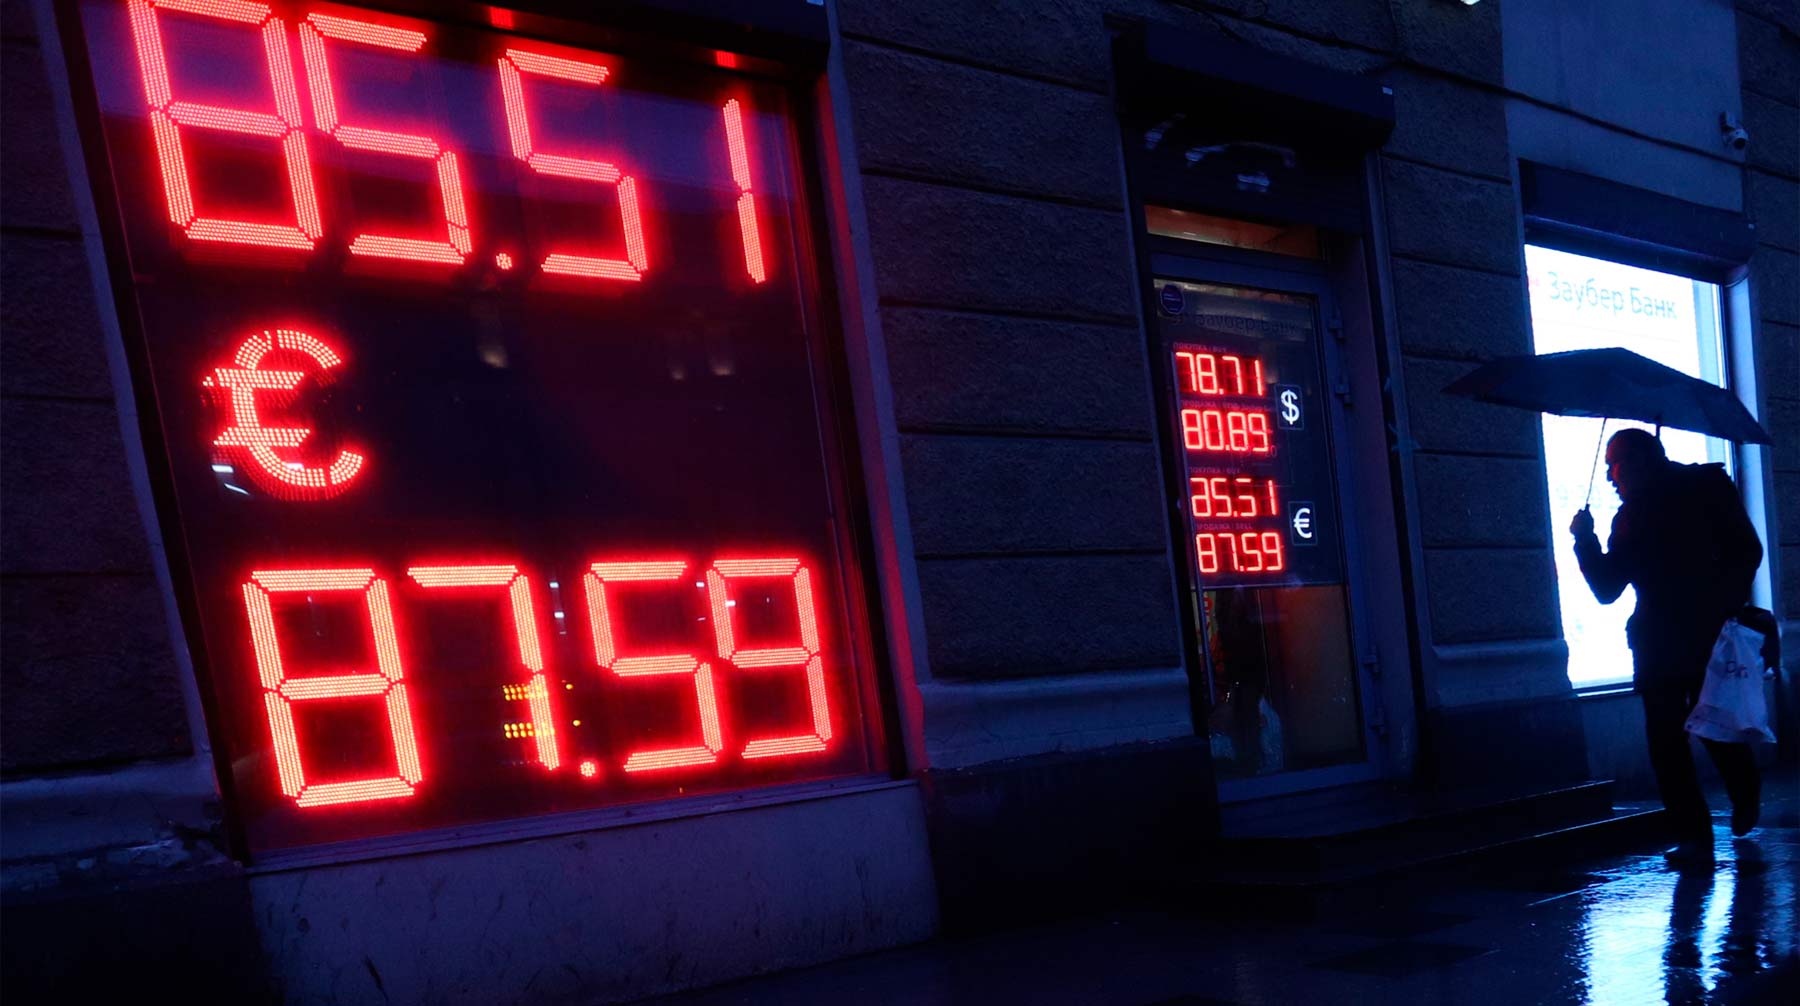 Курс доллара снизился на 1,1% и составил 78,5 рубля, курс евро упал на 0,5% — до 85,1 рубля Фото: © Global Look Press / Sergei Mikhailichenko